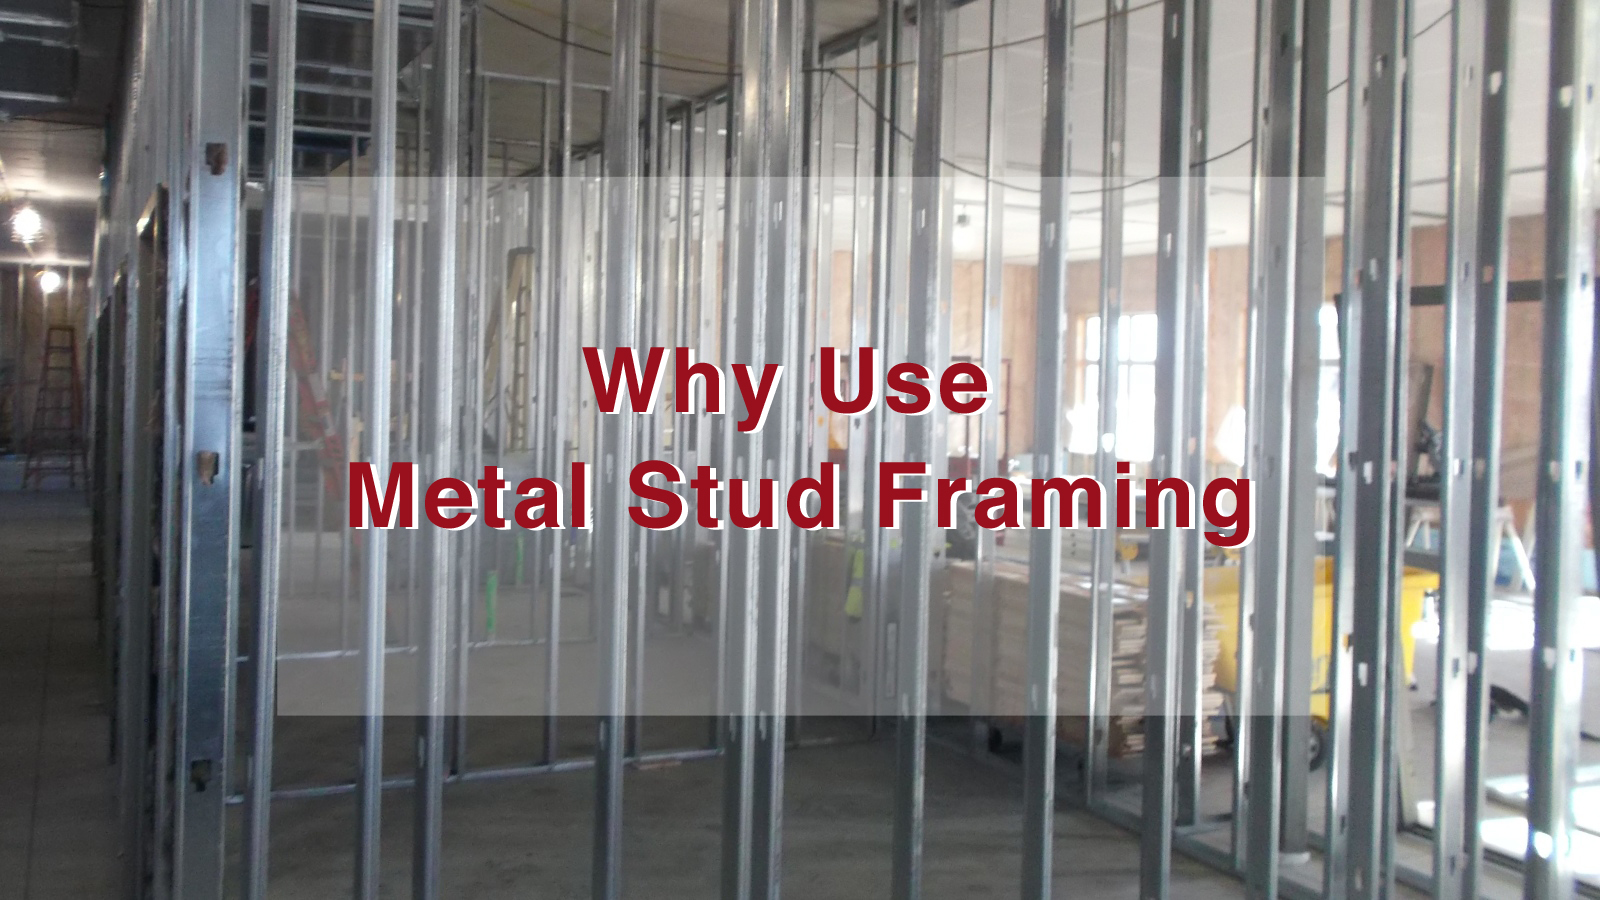 Metal Stud Framing